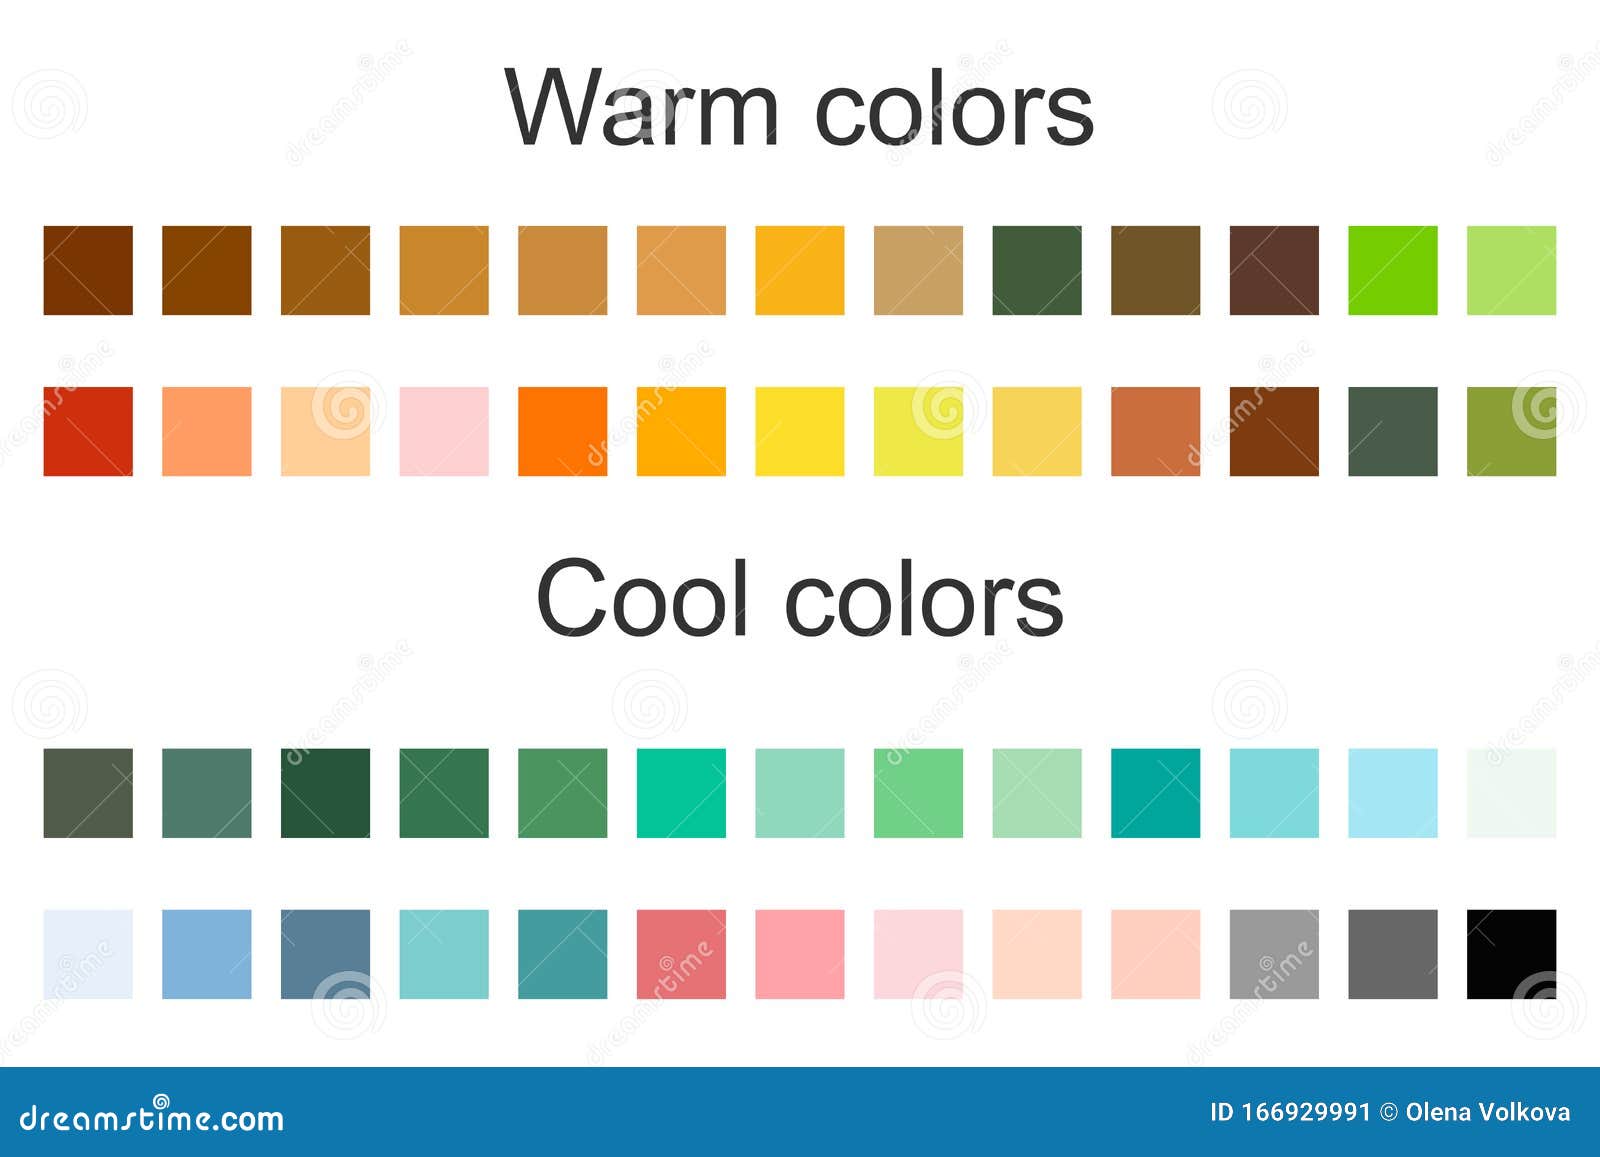 color scheme. warm and cold colors. flat 